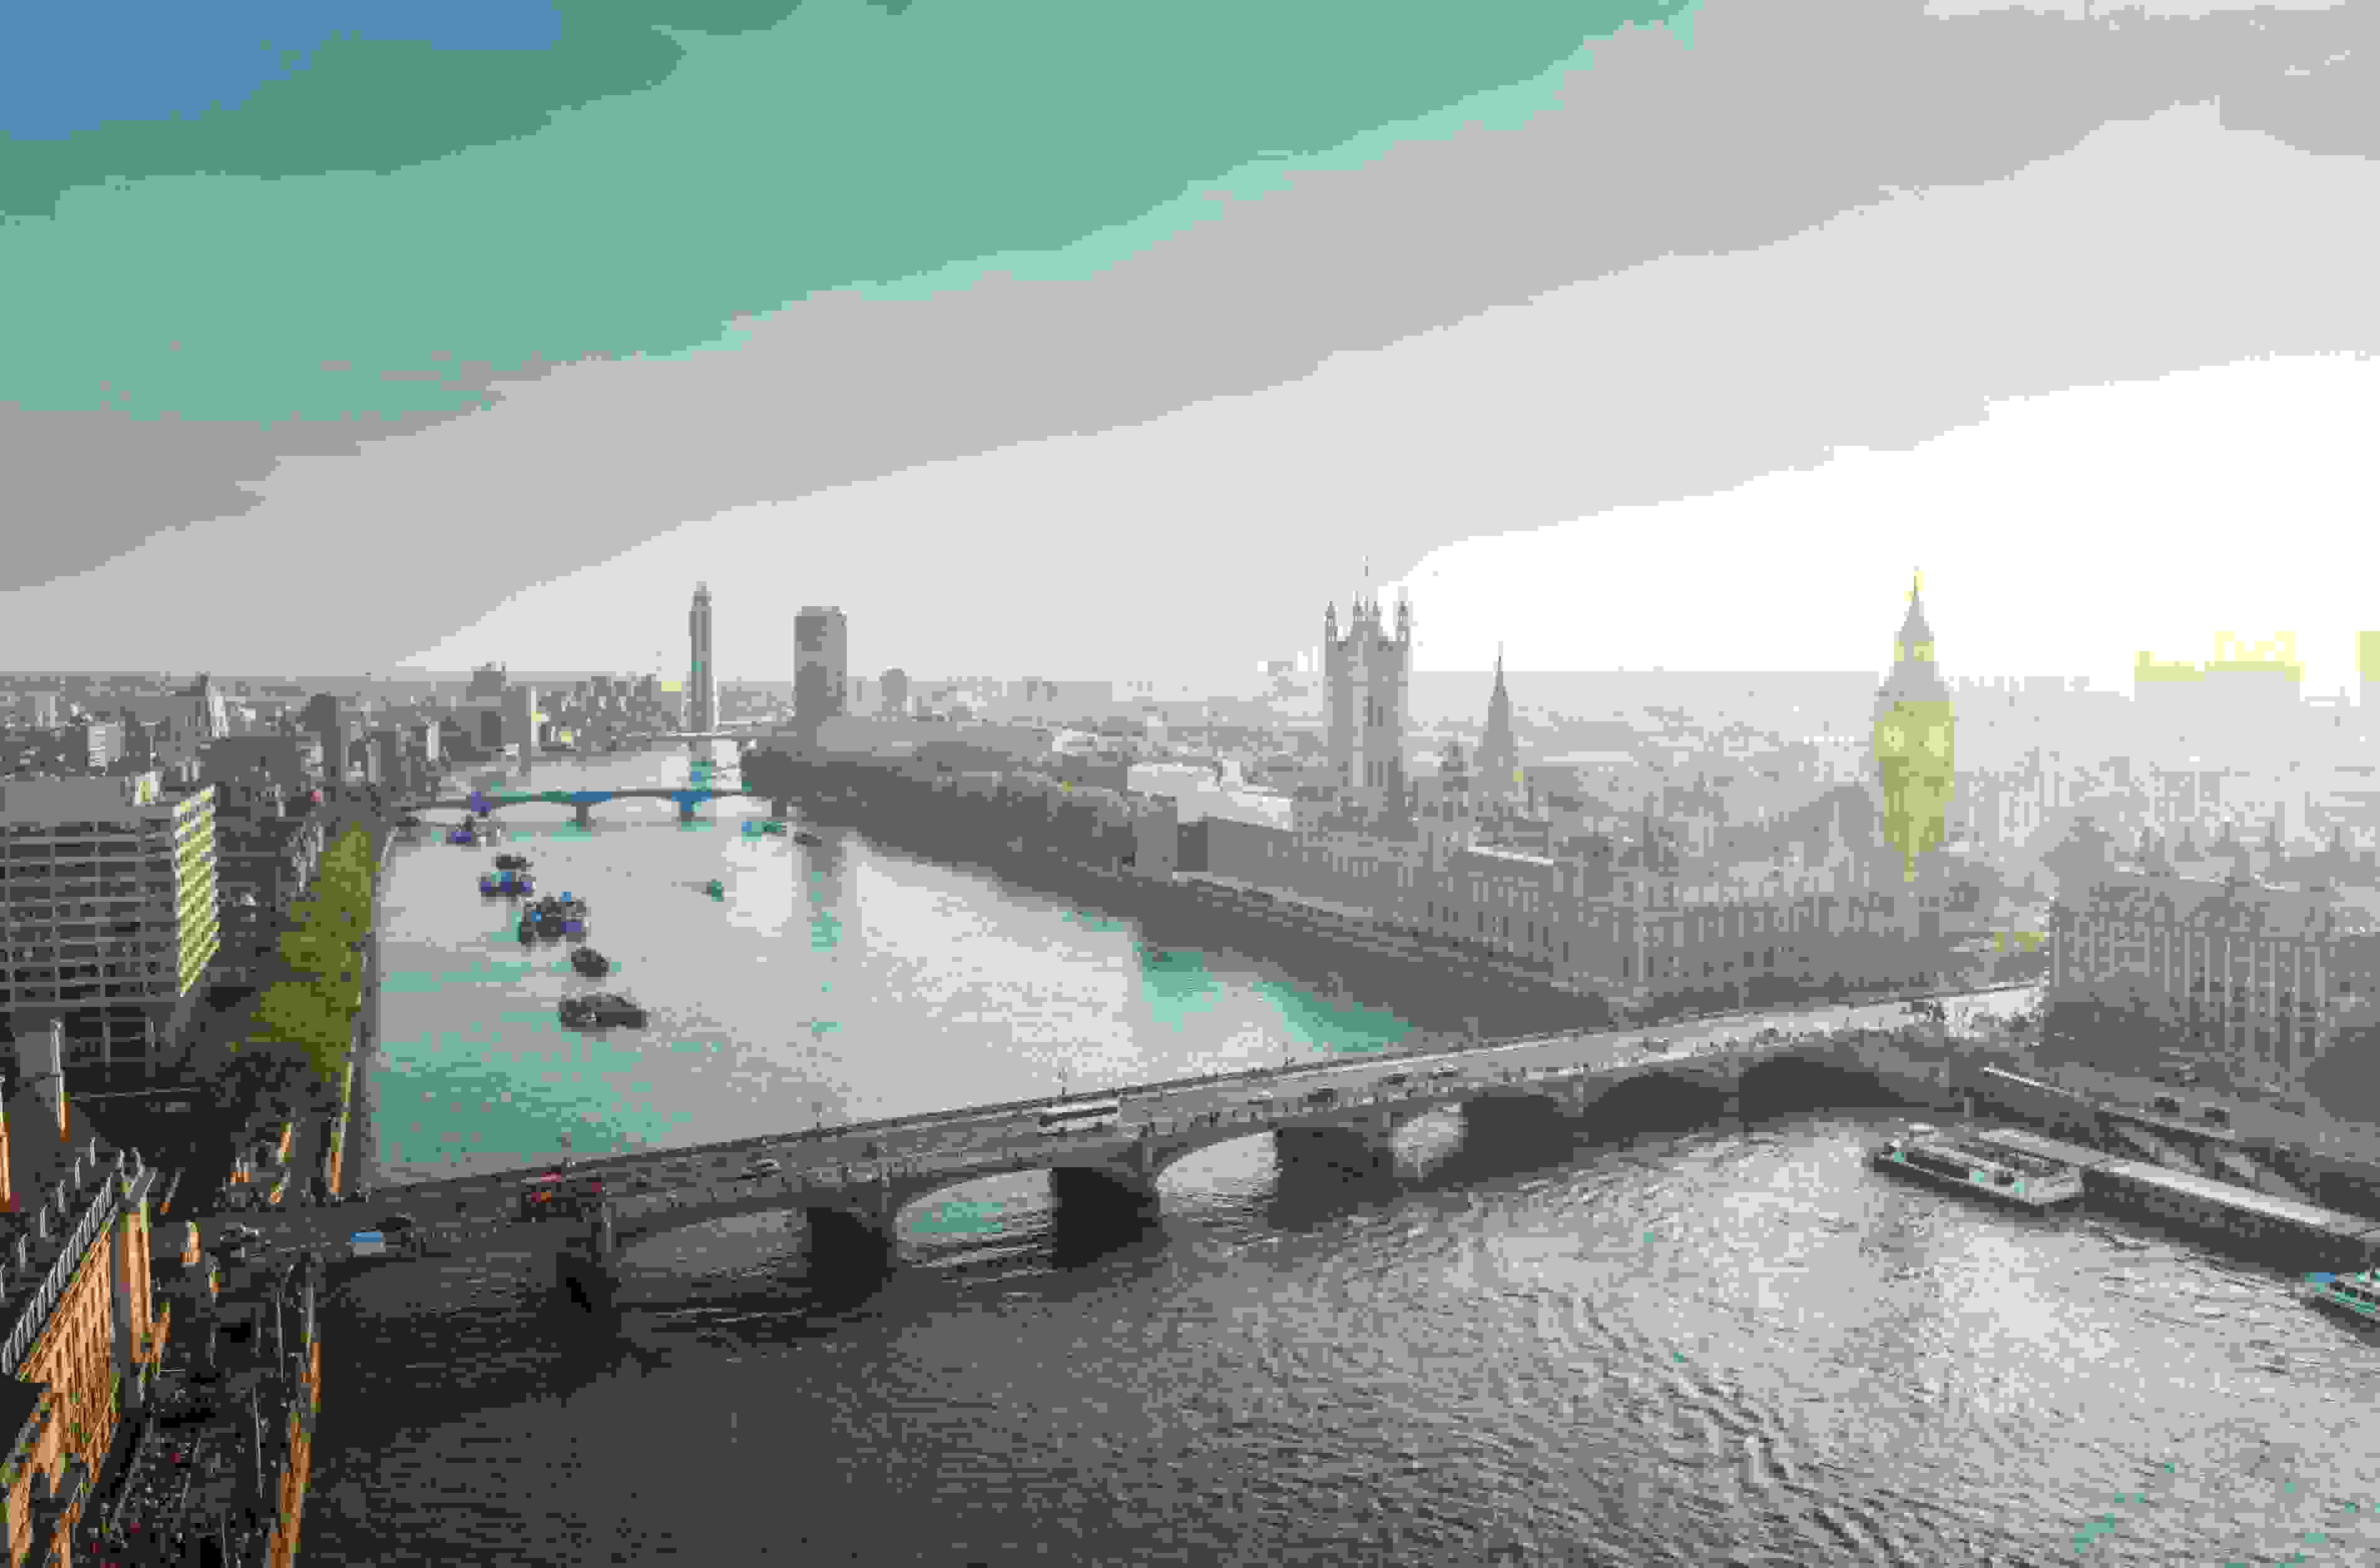 Parliament and Westminster Bridge (aerial)